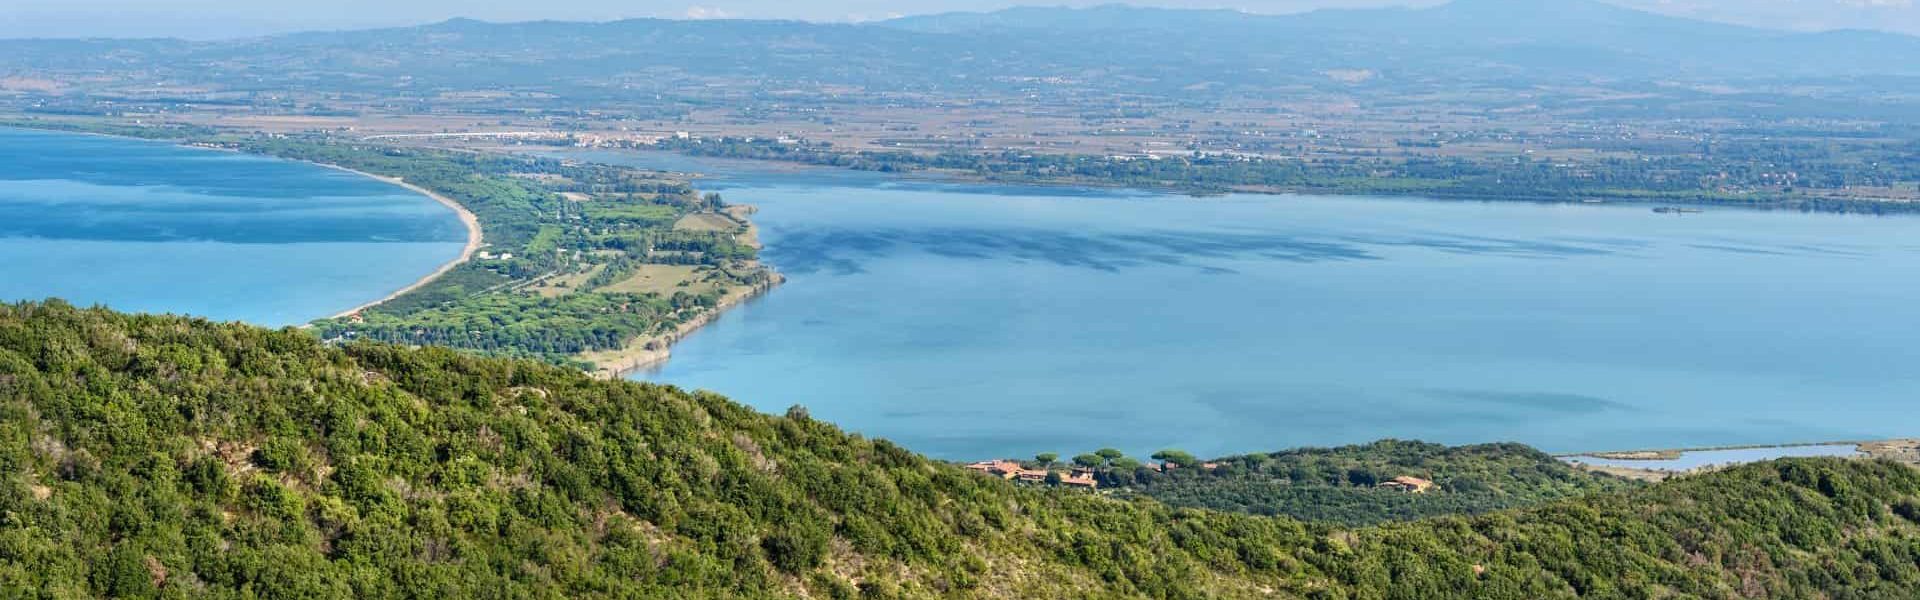 View of Tombolo della Giannella in lagoon Orbetello on peninsula Argentario. Italy